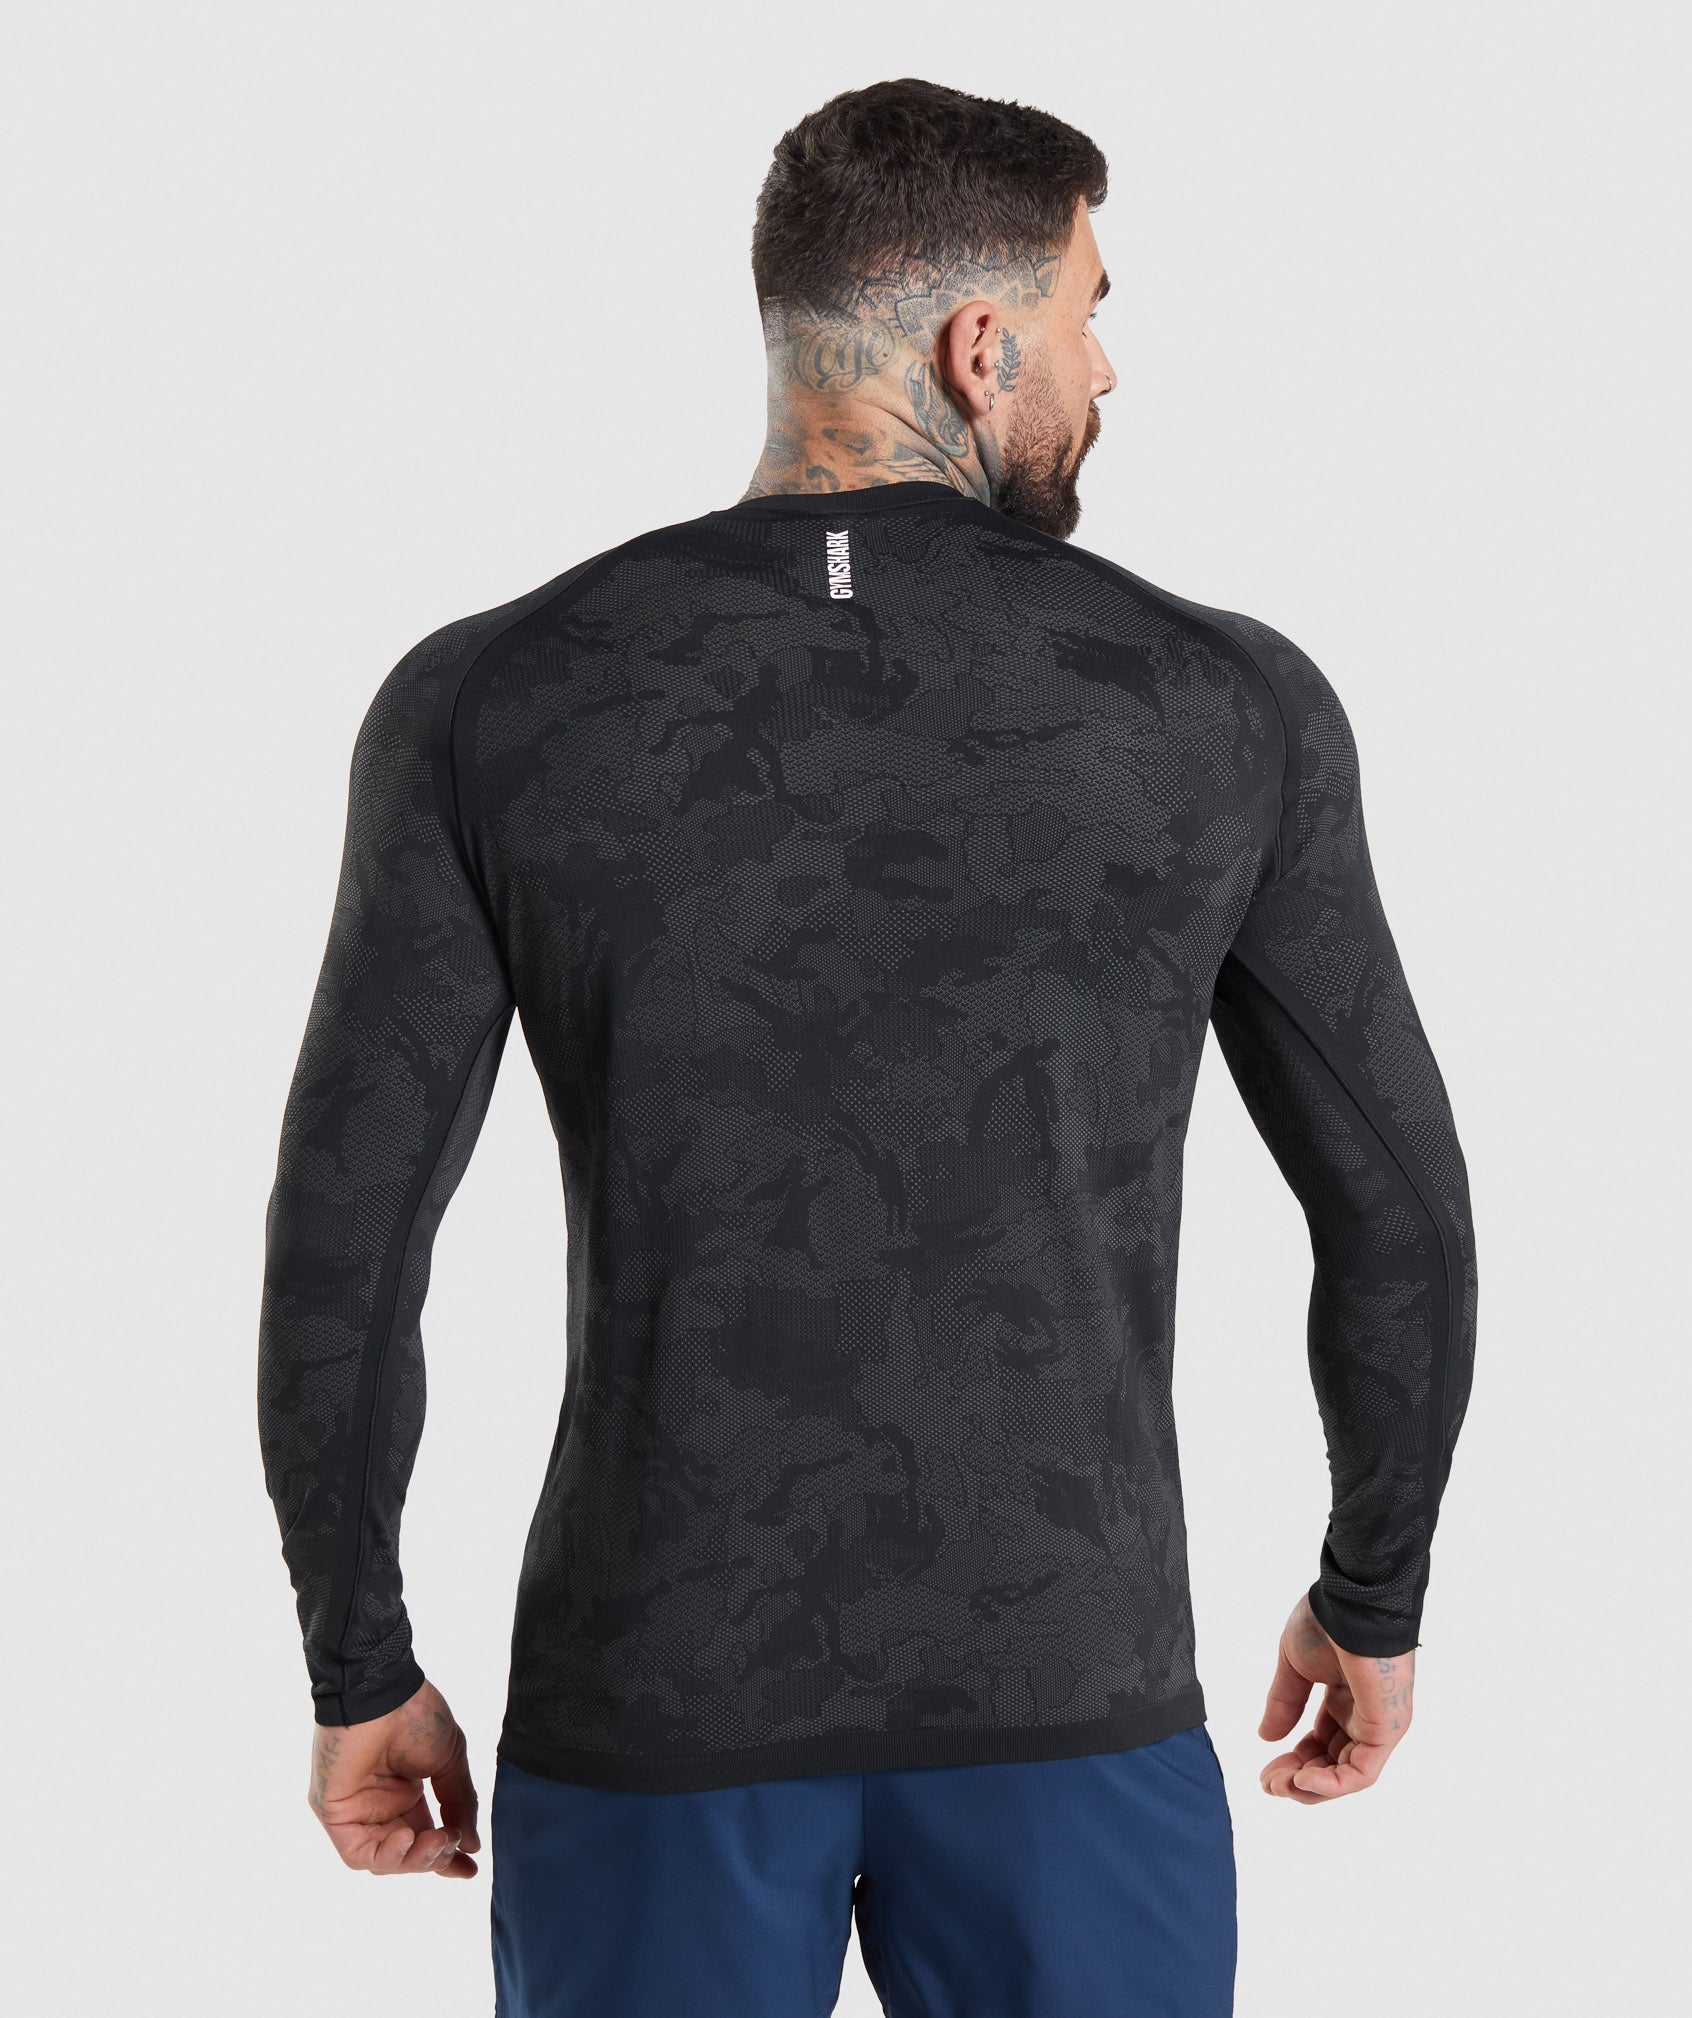 Gymshark Global Graphic Long Sleeve T-Shirt - Black